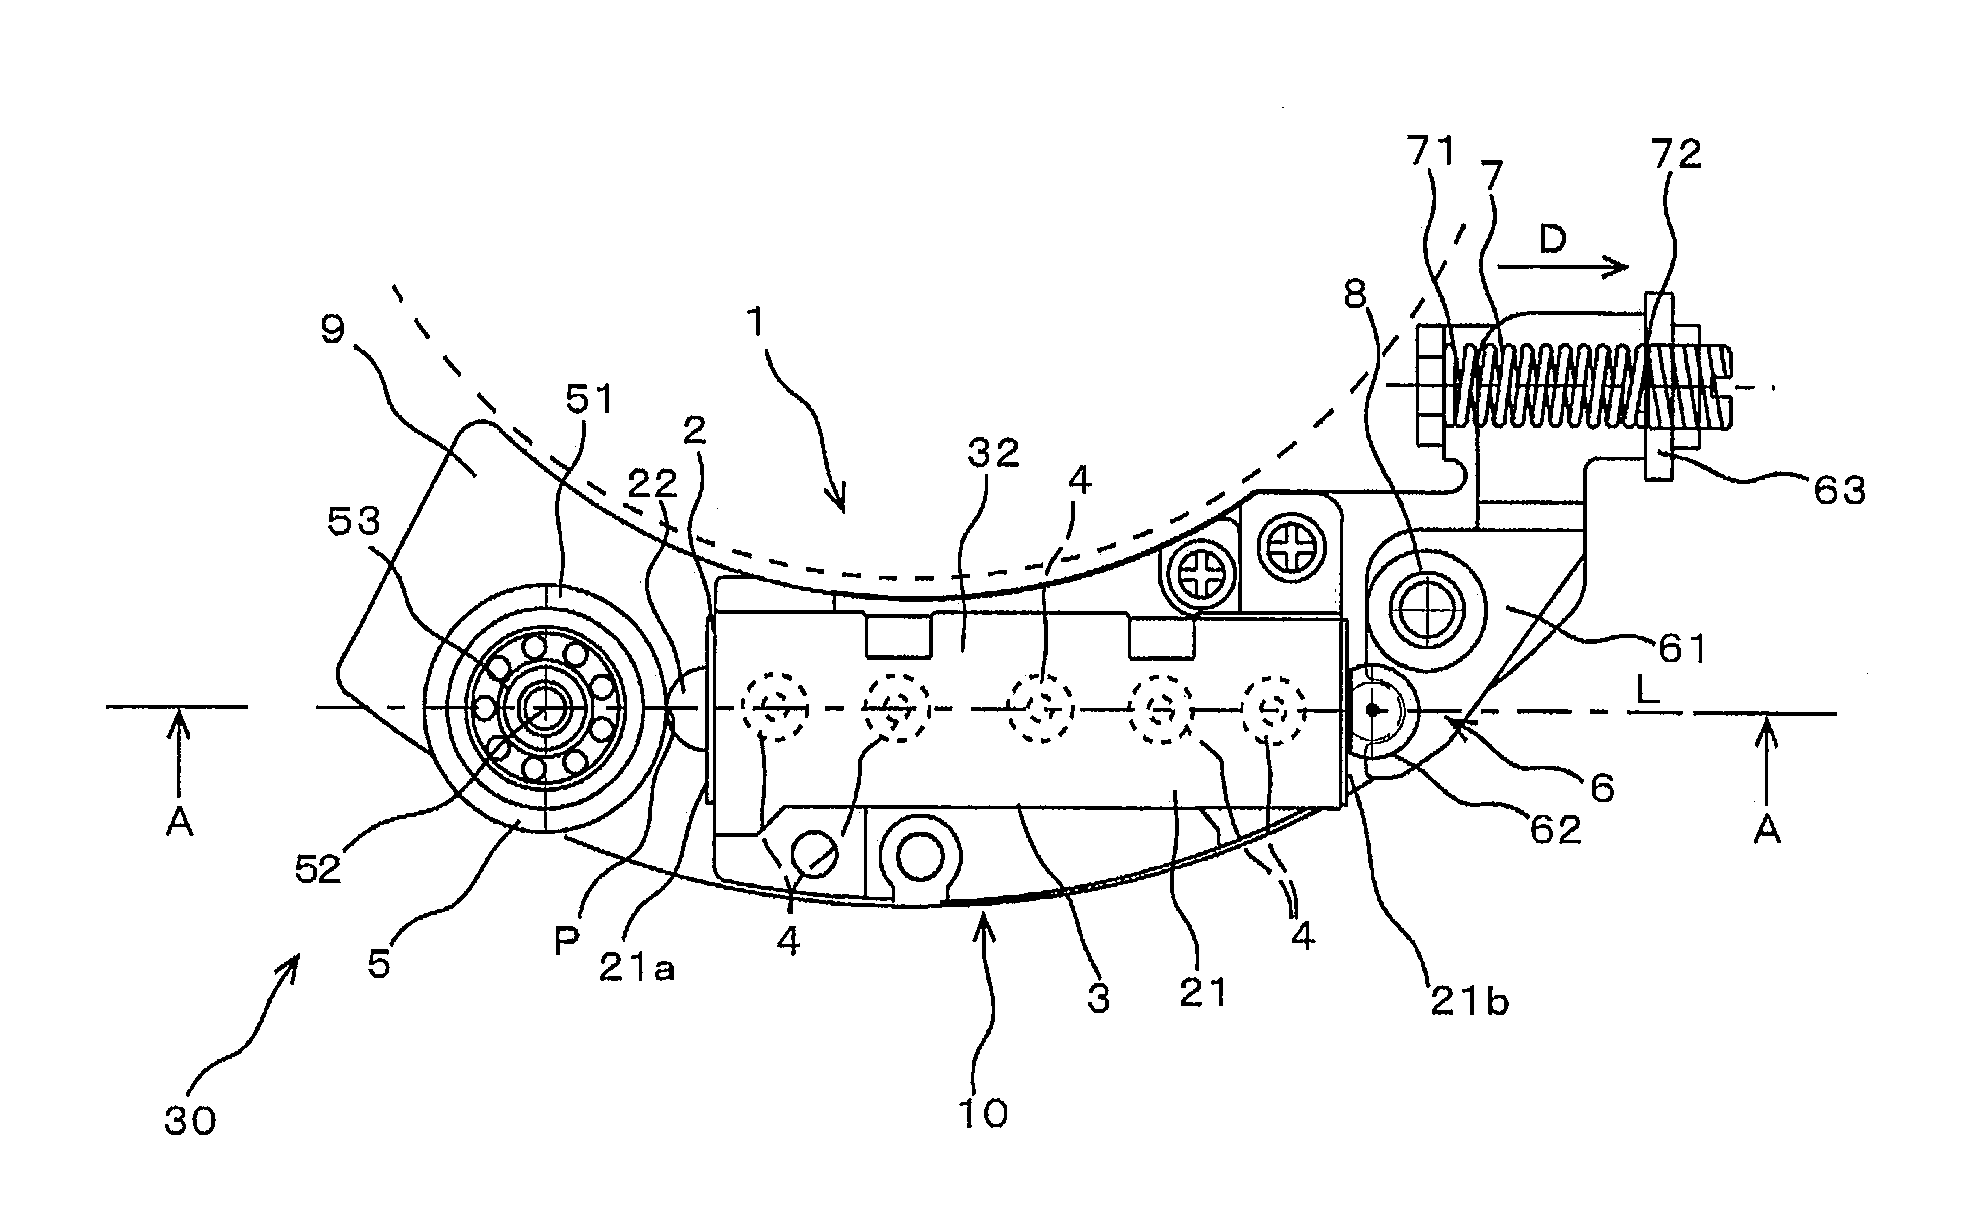 Oscillator Holding Mechanism, Oscillation Motor, and Lens Driving Device